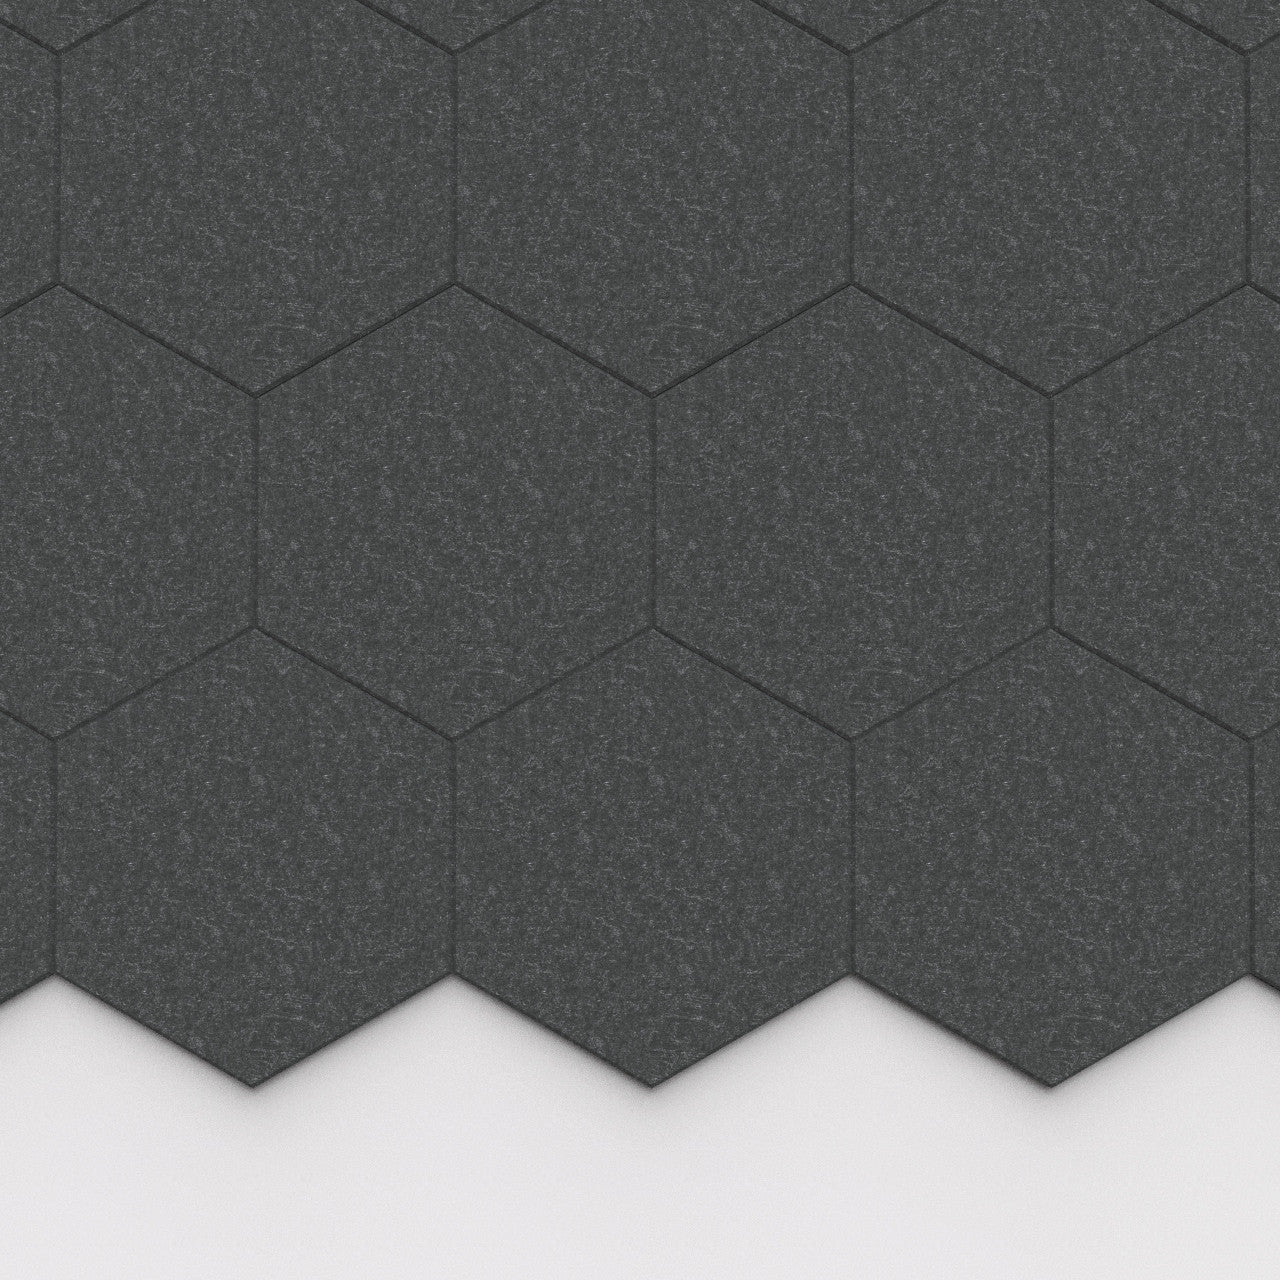 100% Recycled PET Felt Hexagon Plain Large Acoustic Tile Dark Grey | Plastock